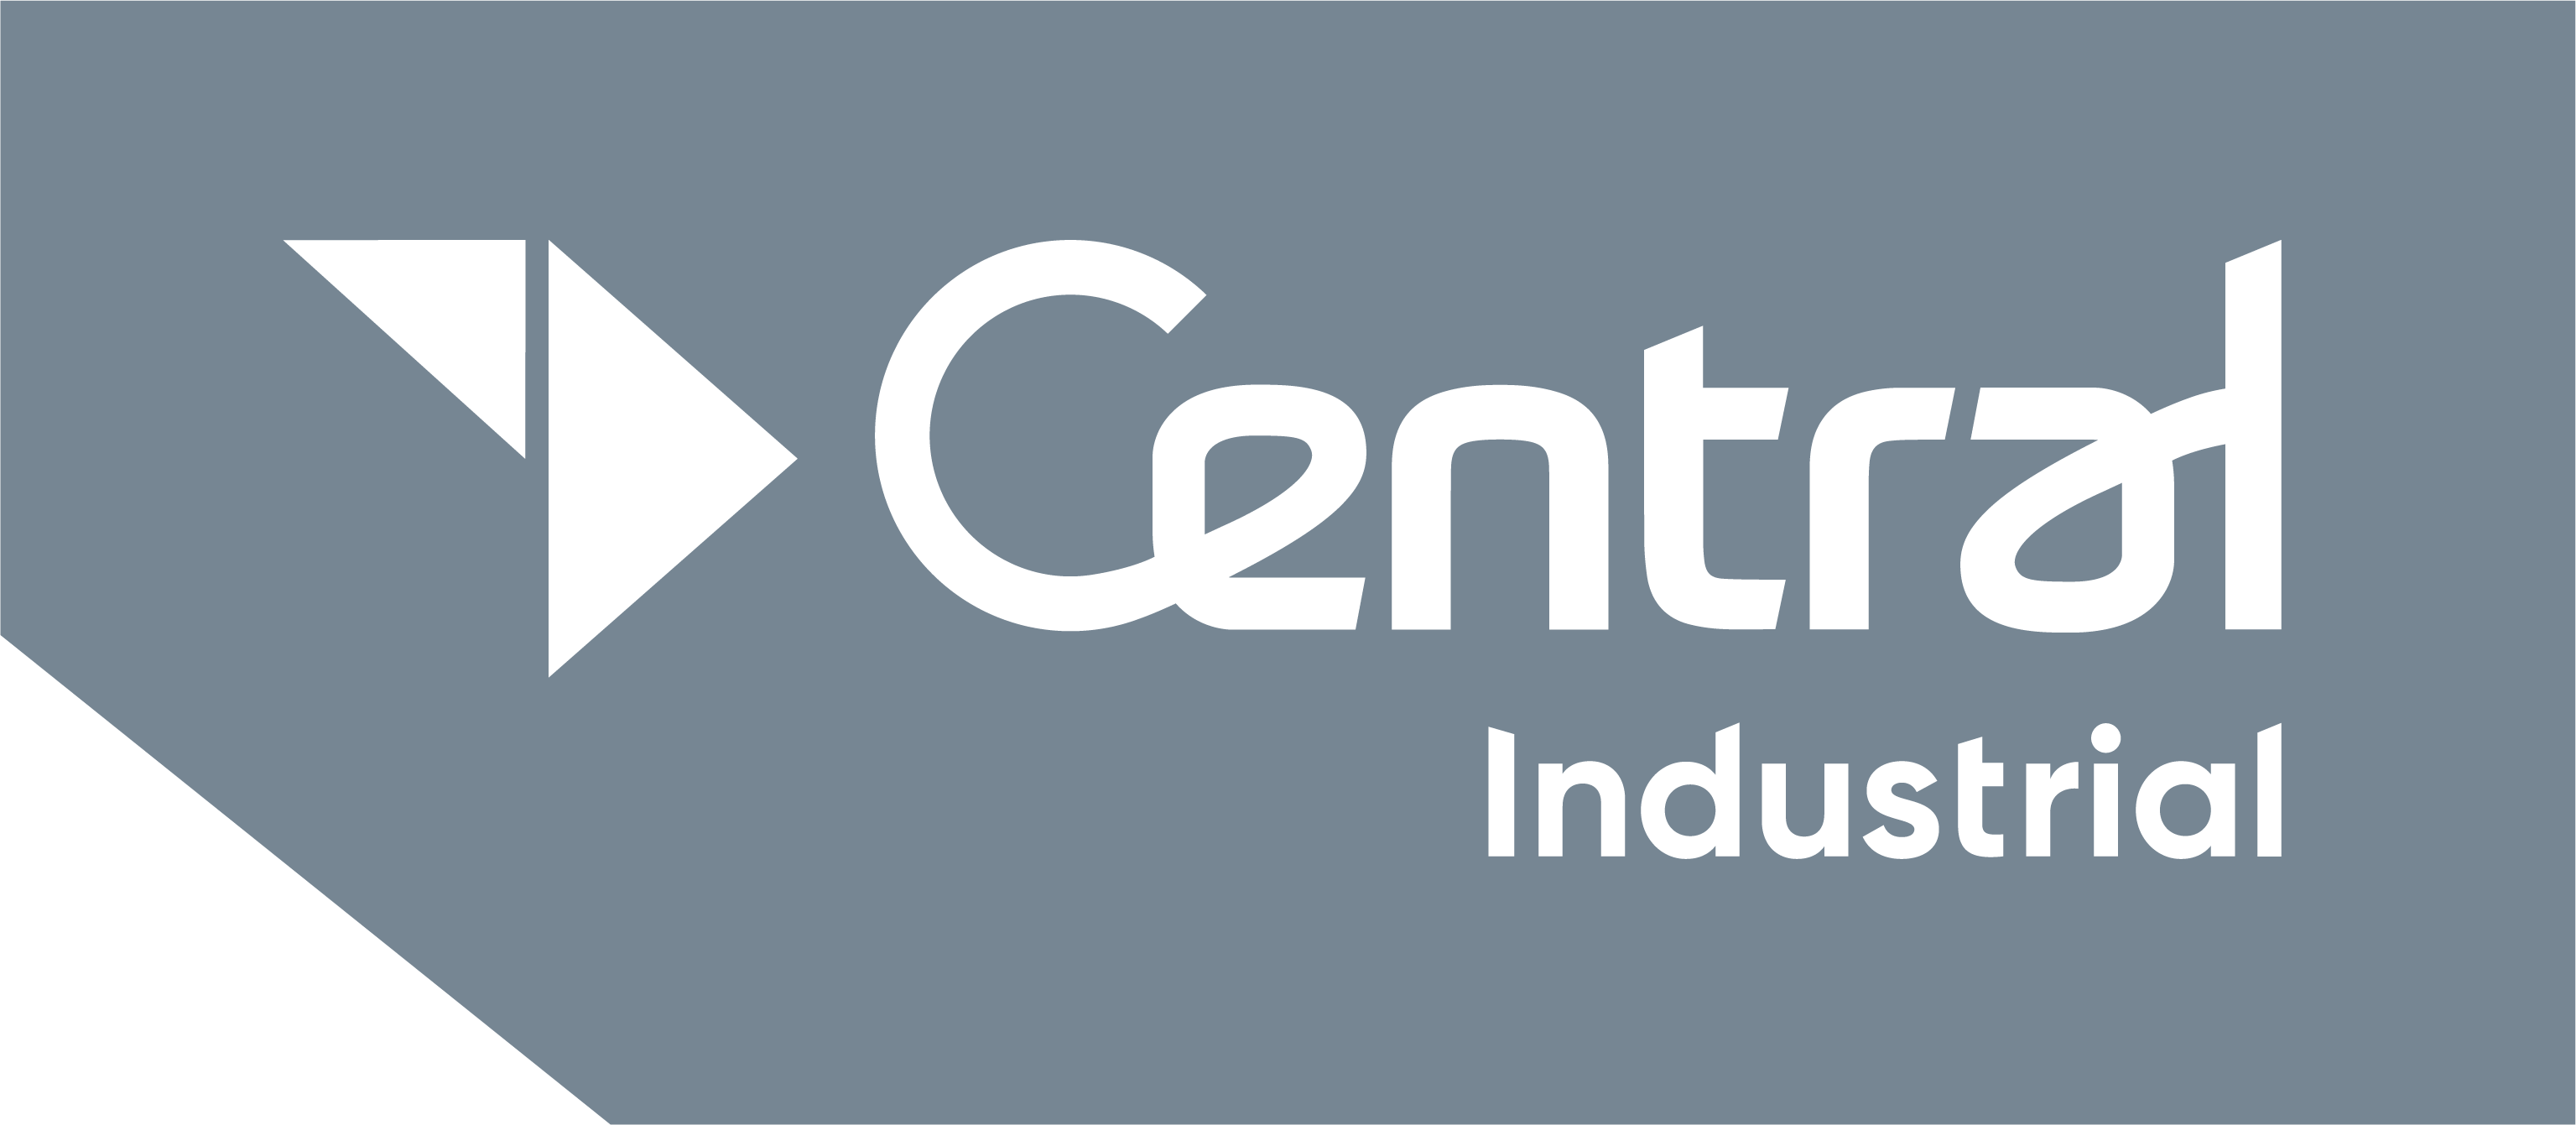 Central industrial logo